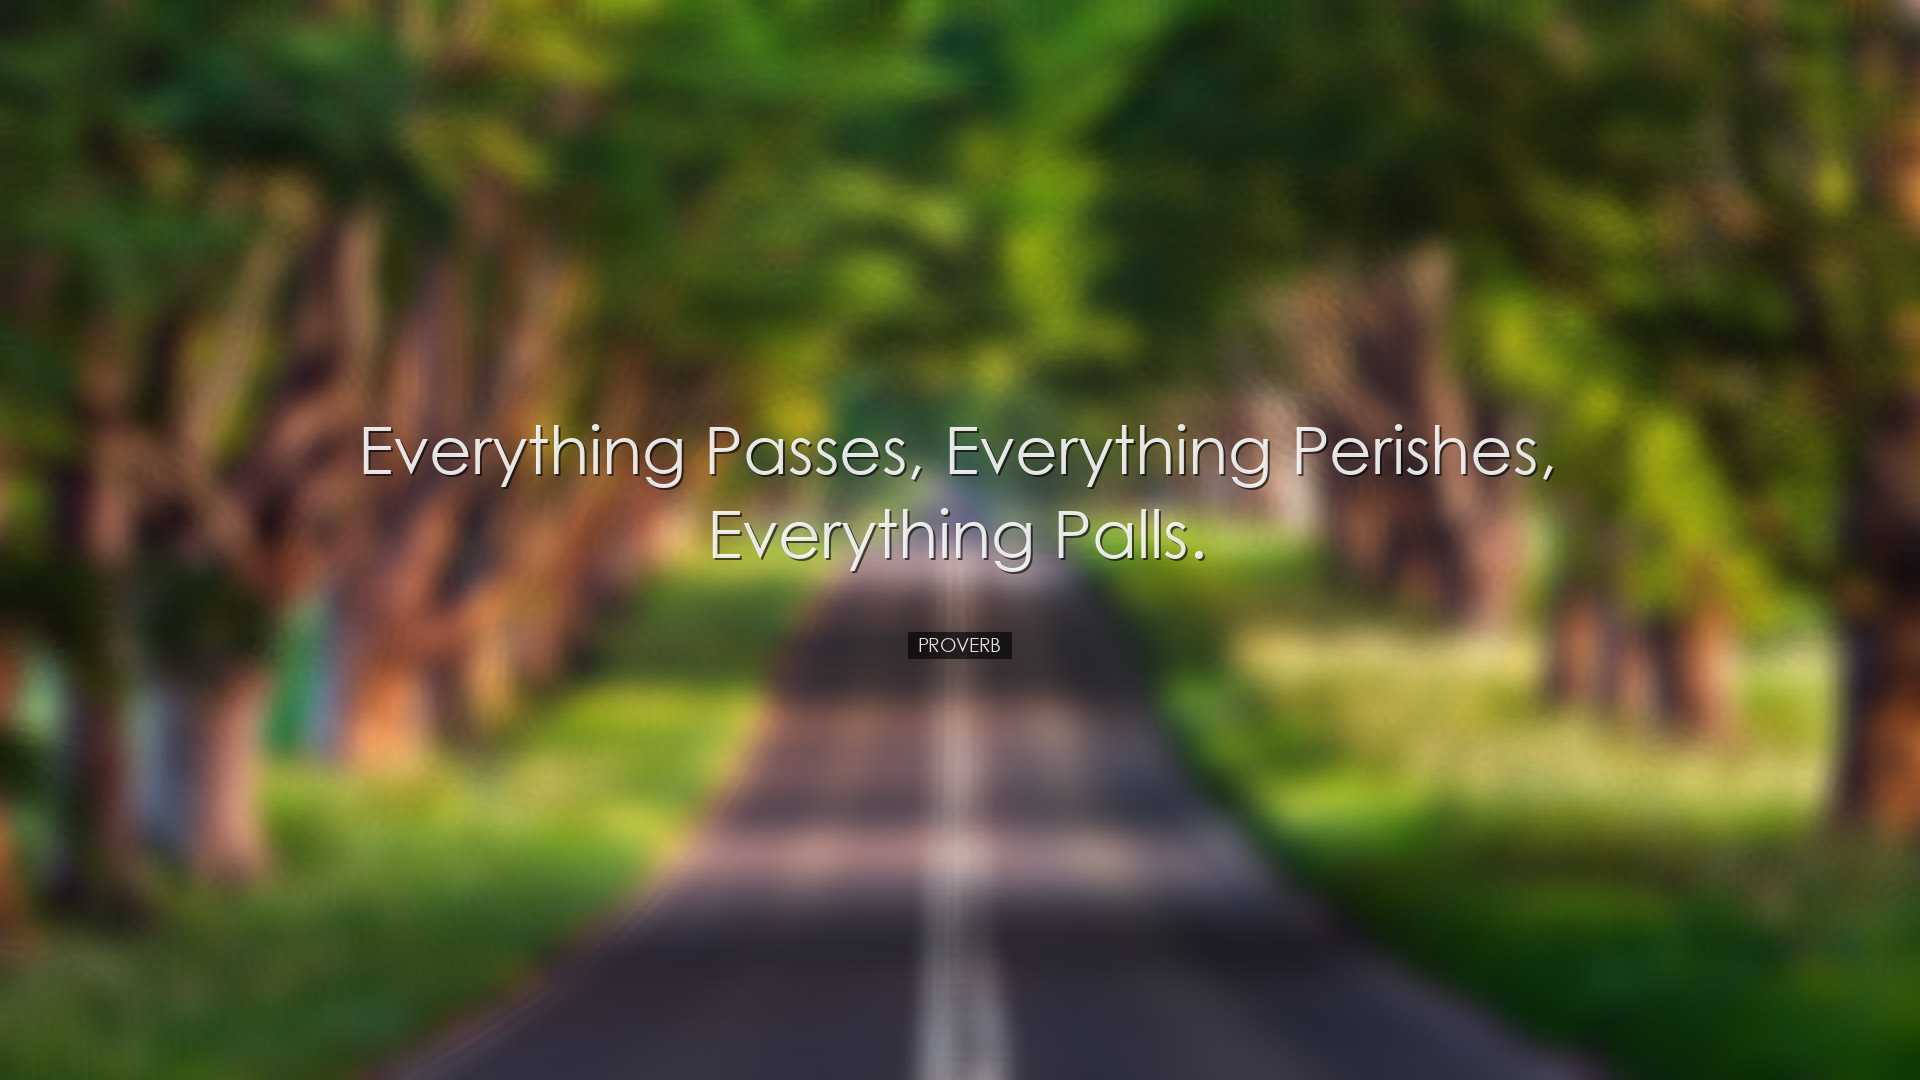 Everything passes, everything perishes, everything palls. - Prover